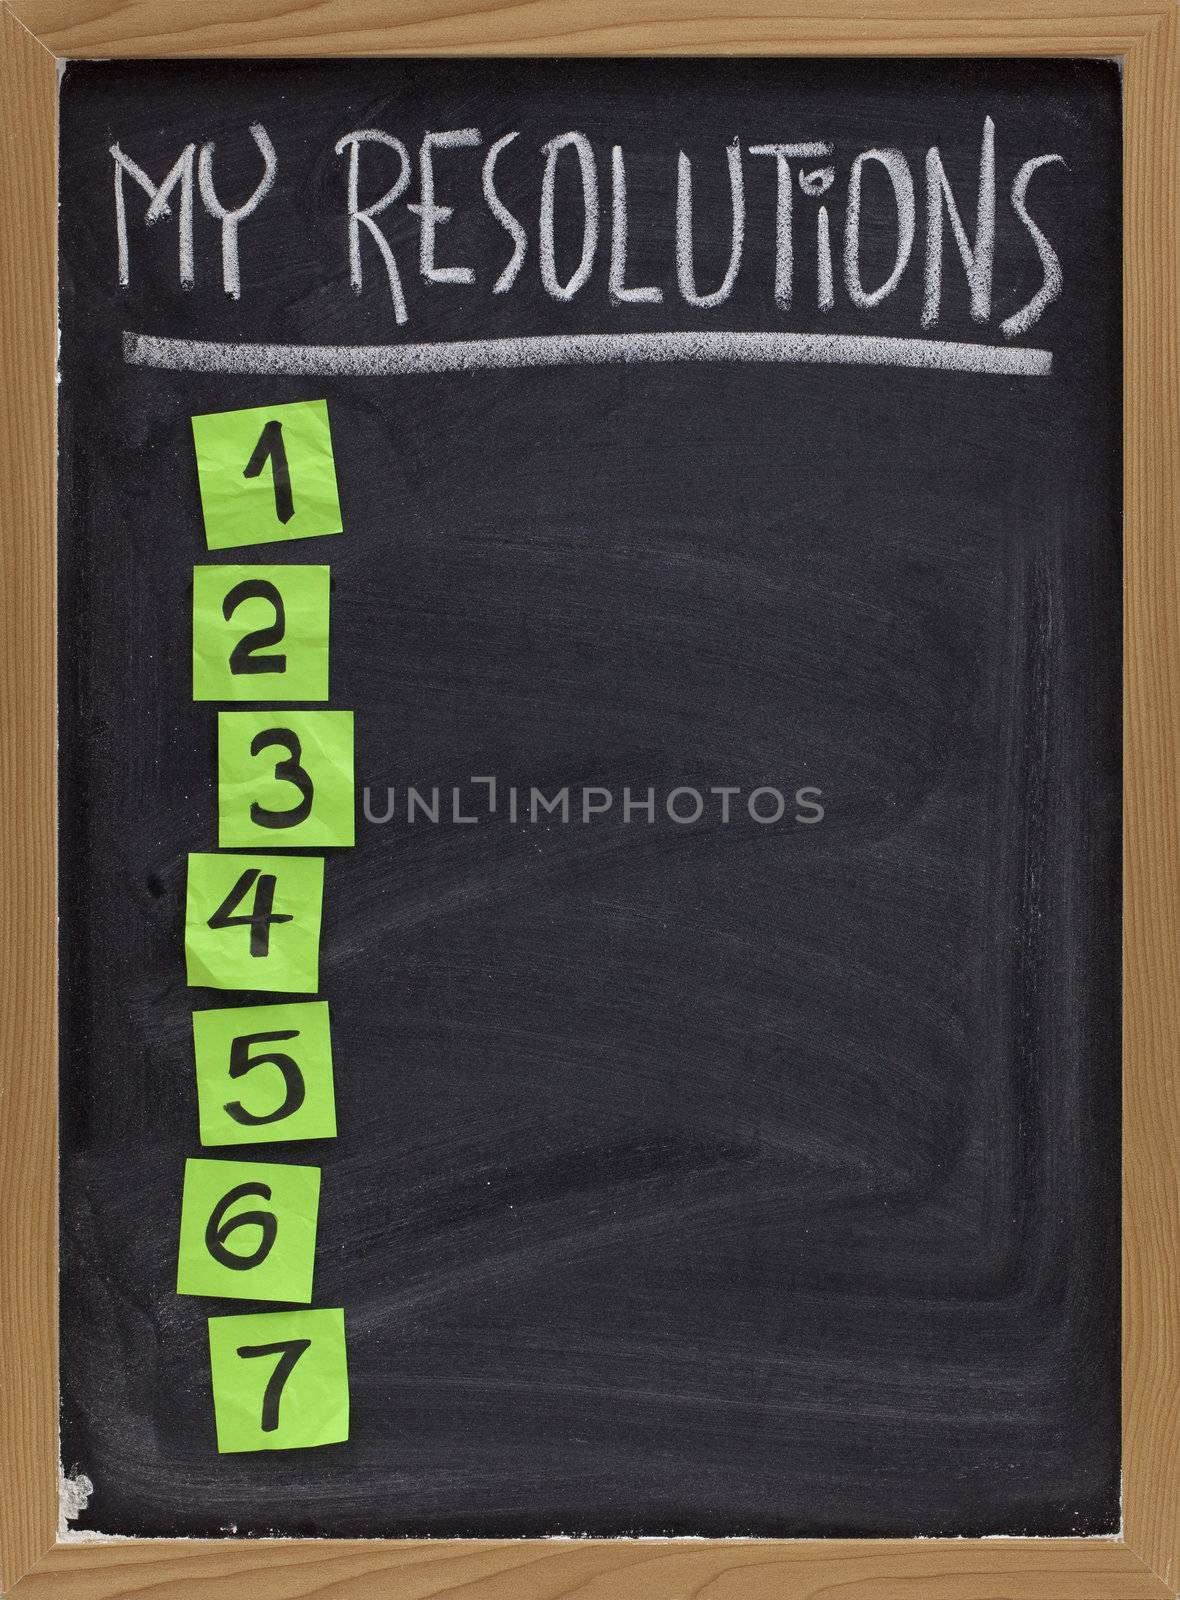 my resolutions list by PixelsAway